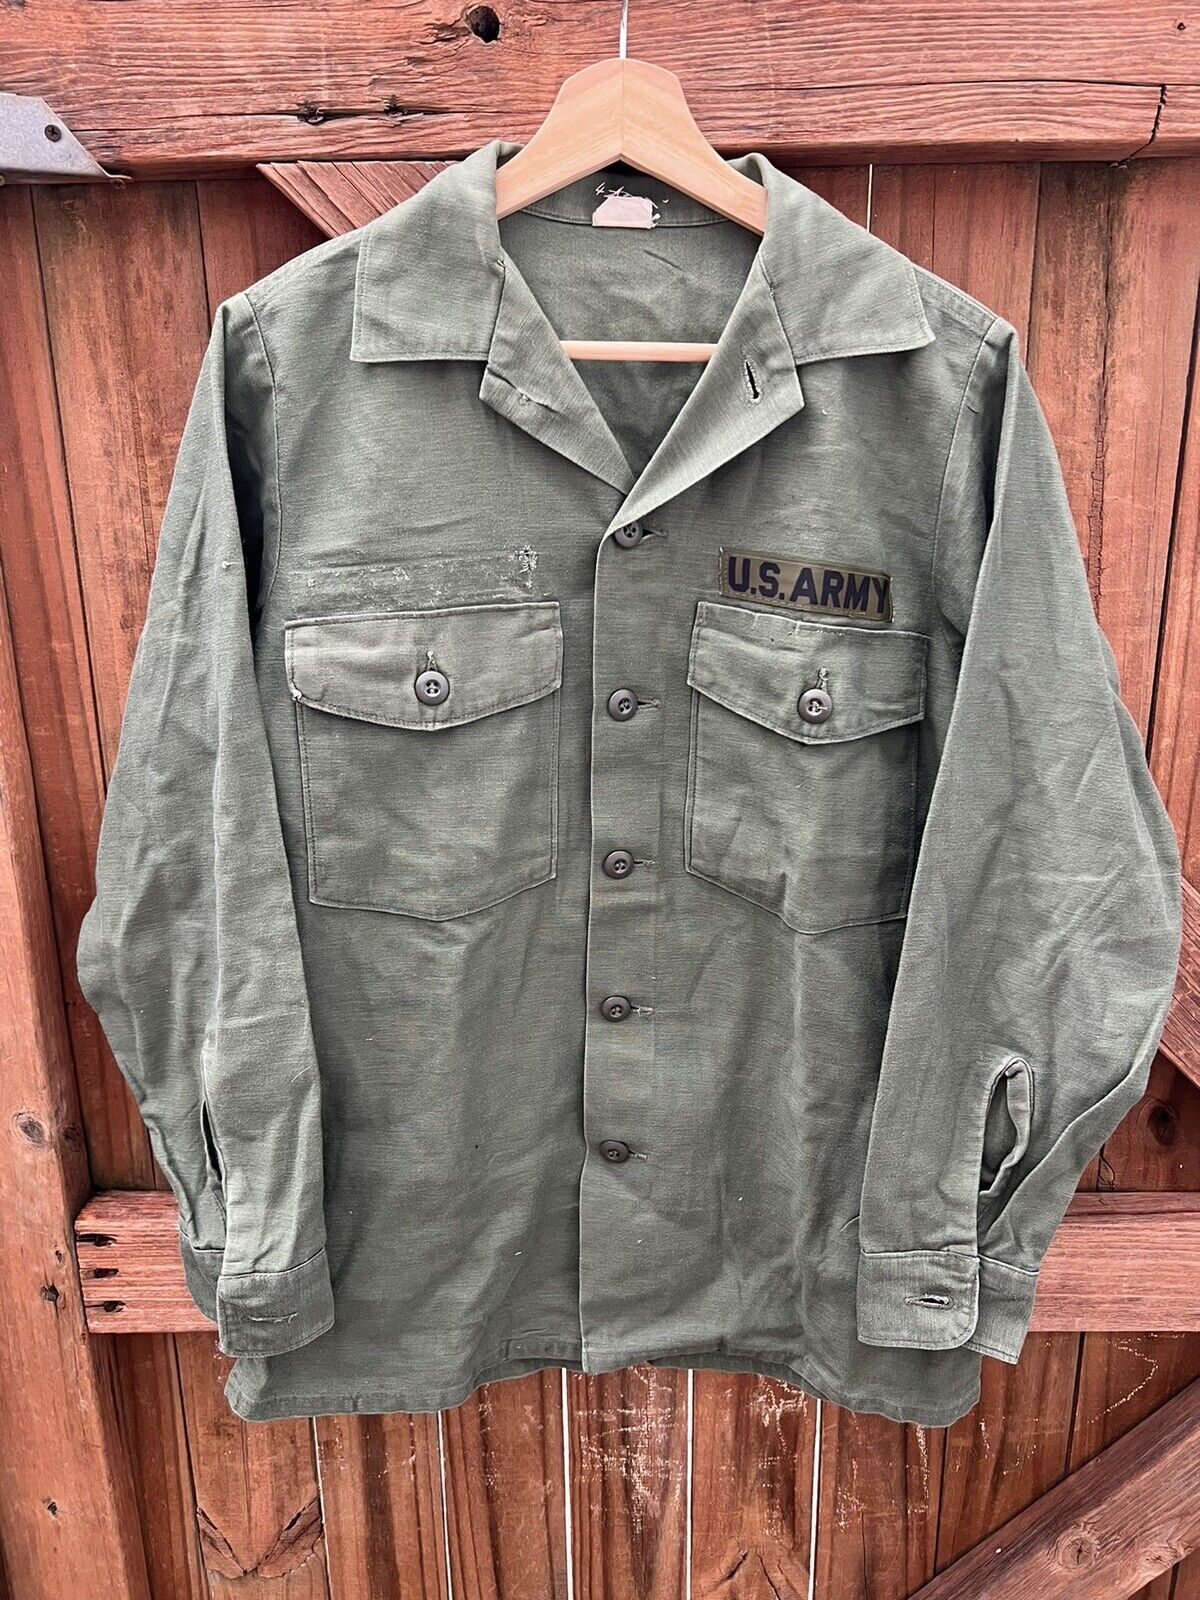 Vtg Vietnam US Army Uniform Shirt 14.5 x 31 Cotton Sateen OG107 Green Olive Drab